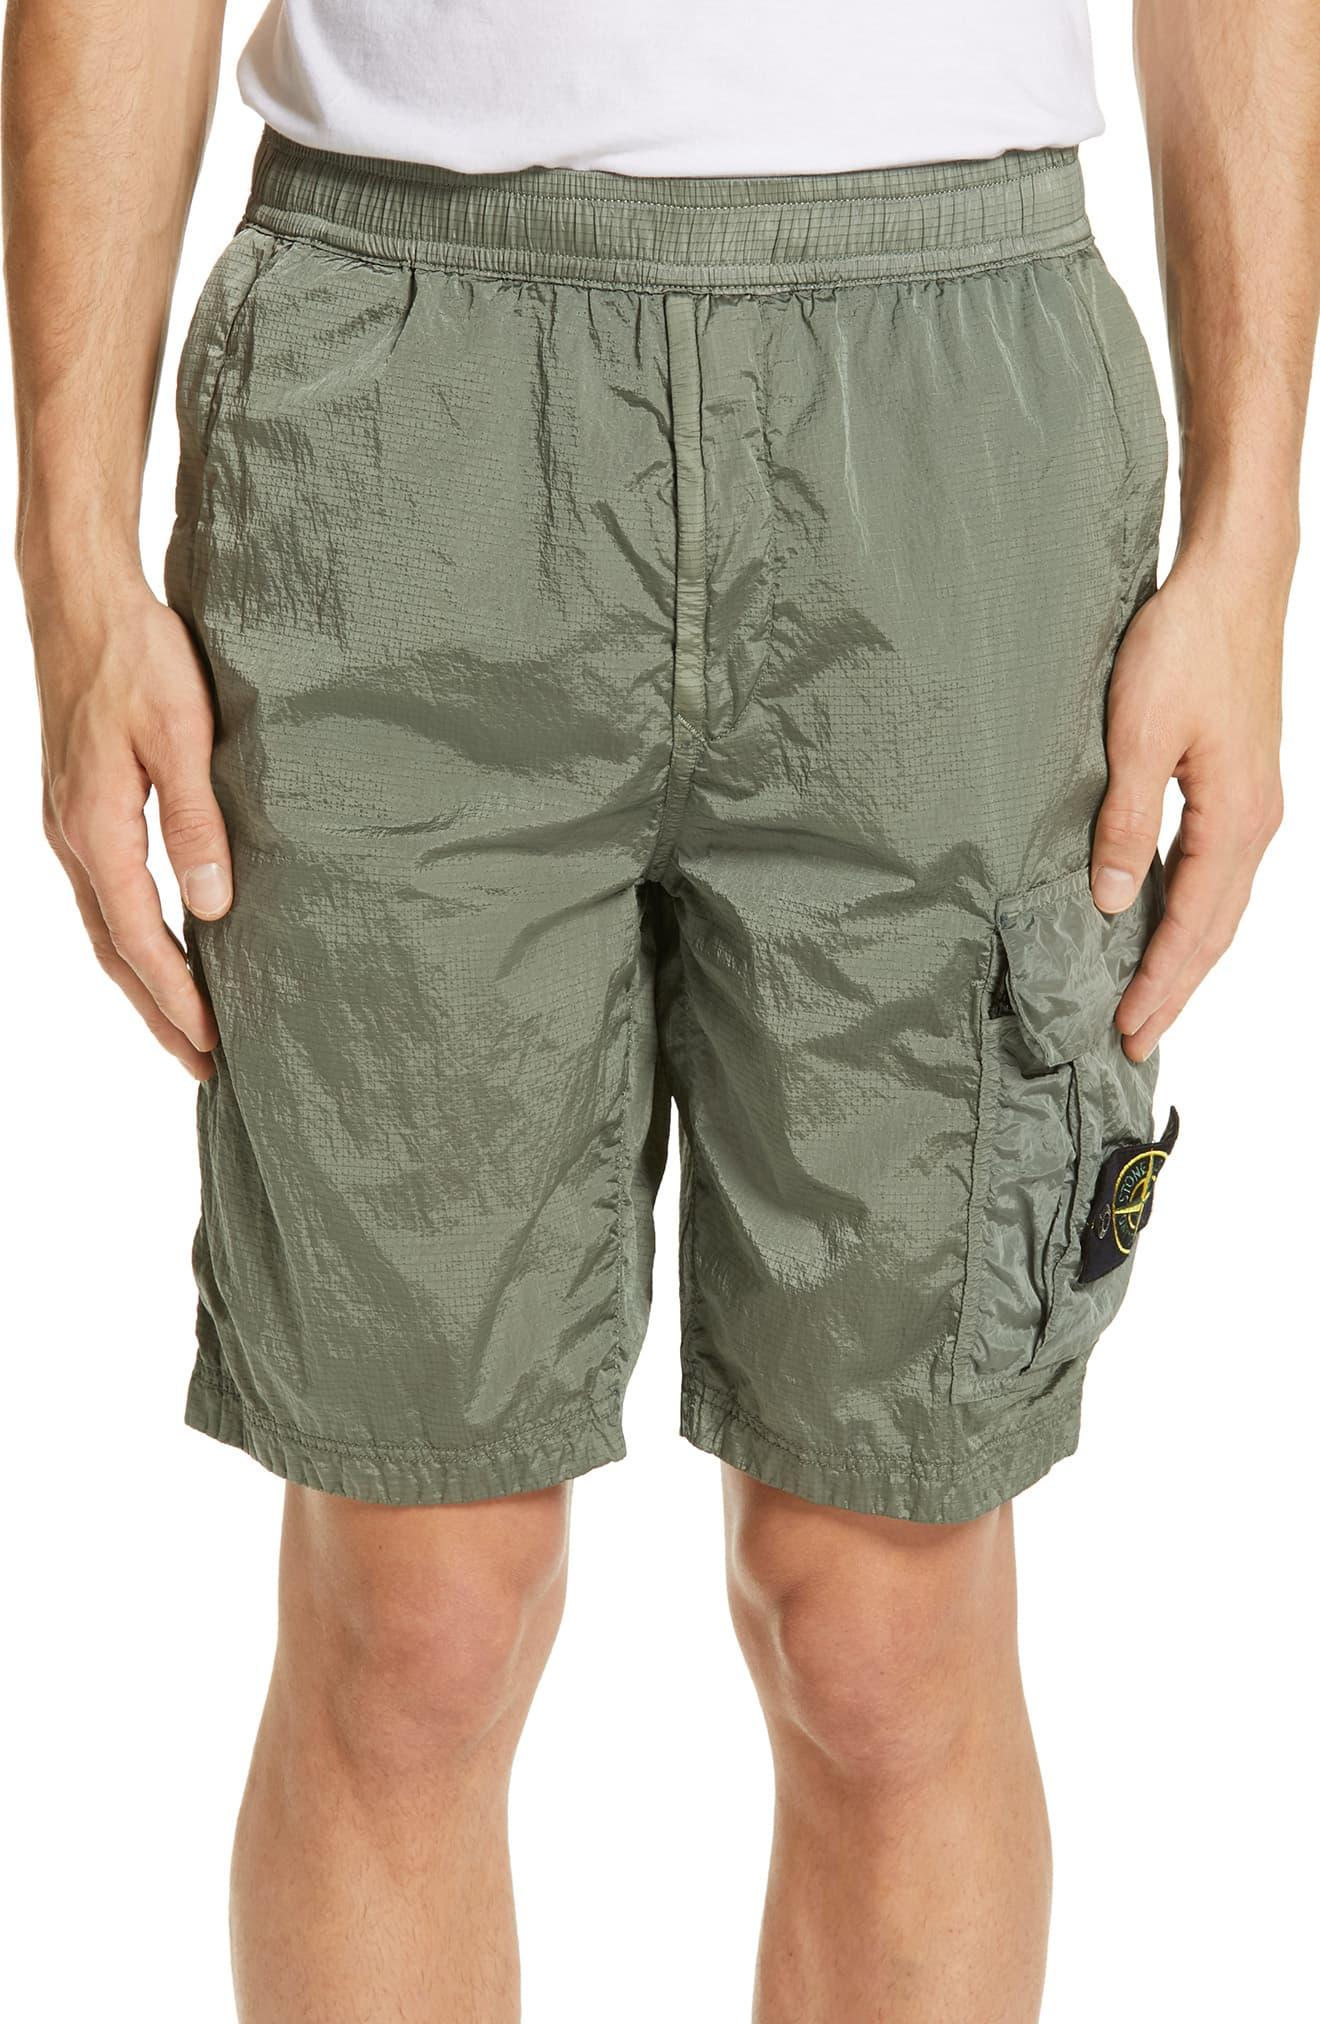 Stone Island Synthetic Nylon Cargo Shorts in Green for Men - Lyst